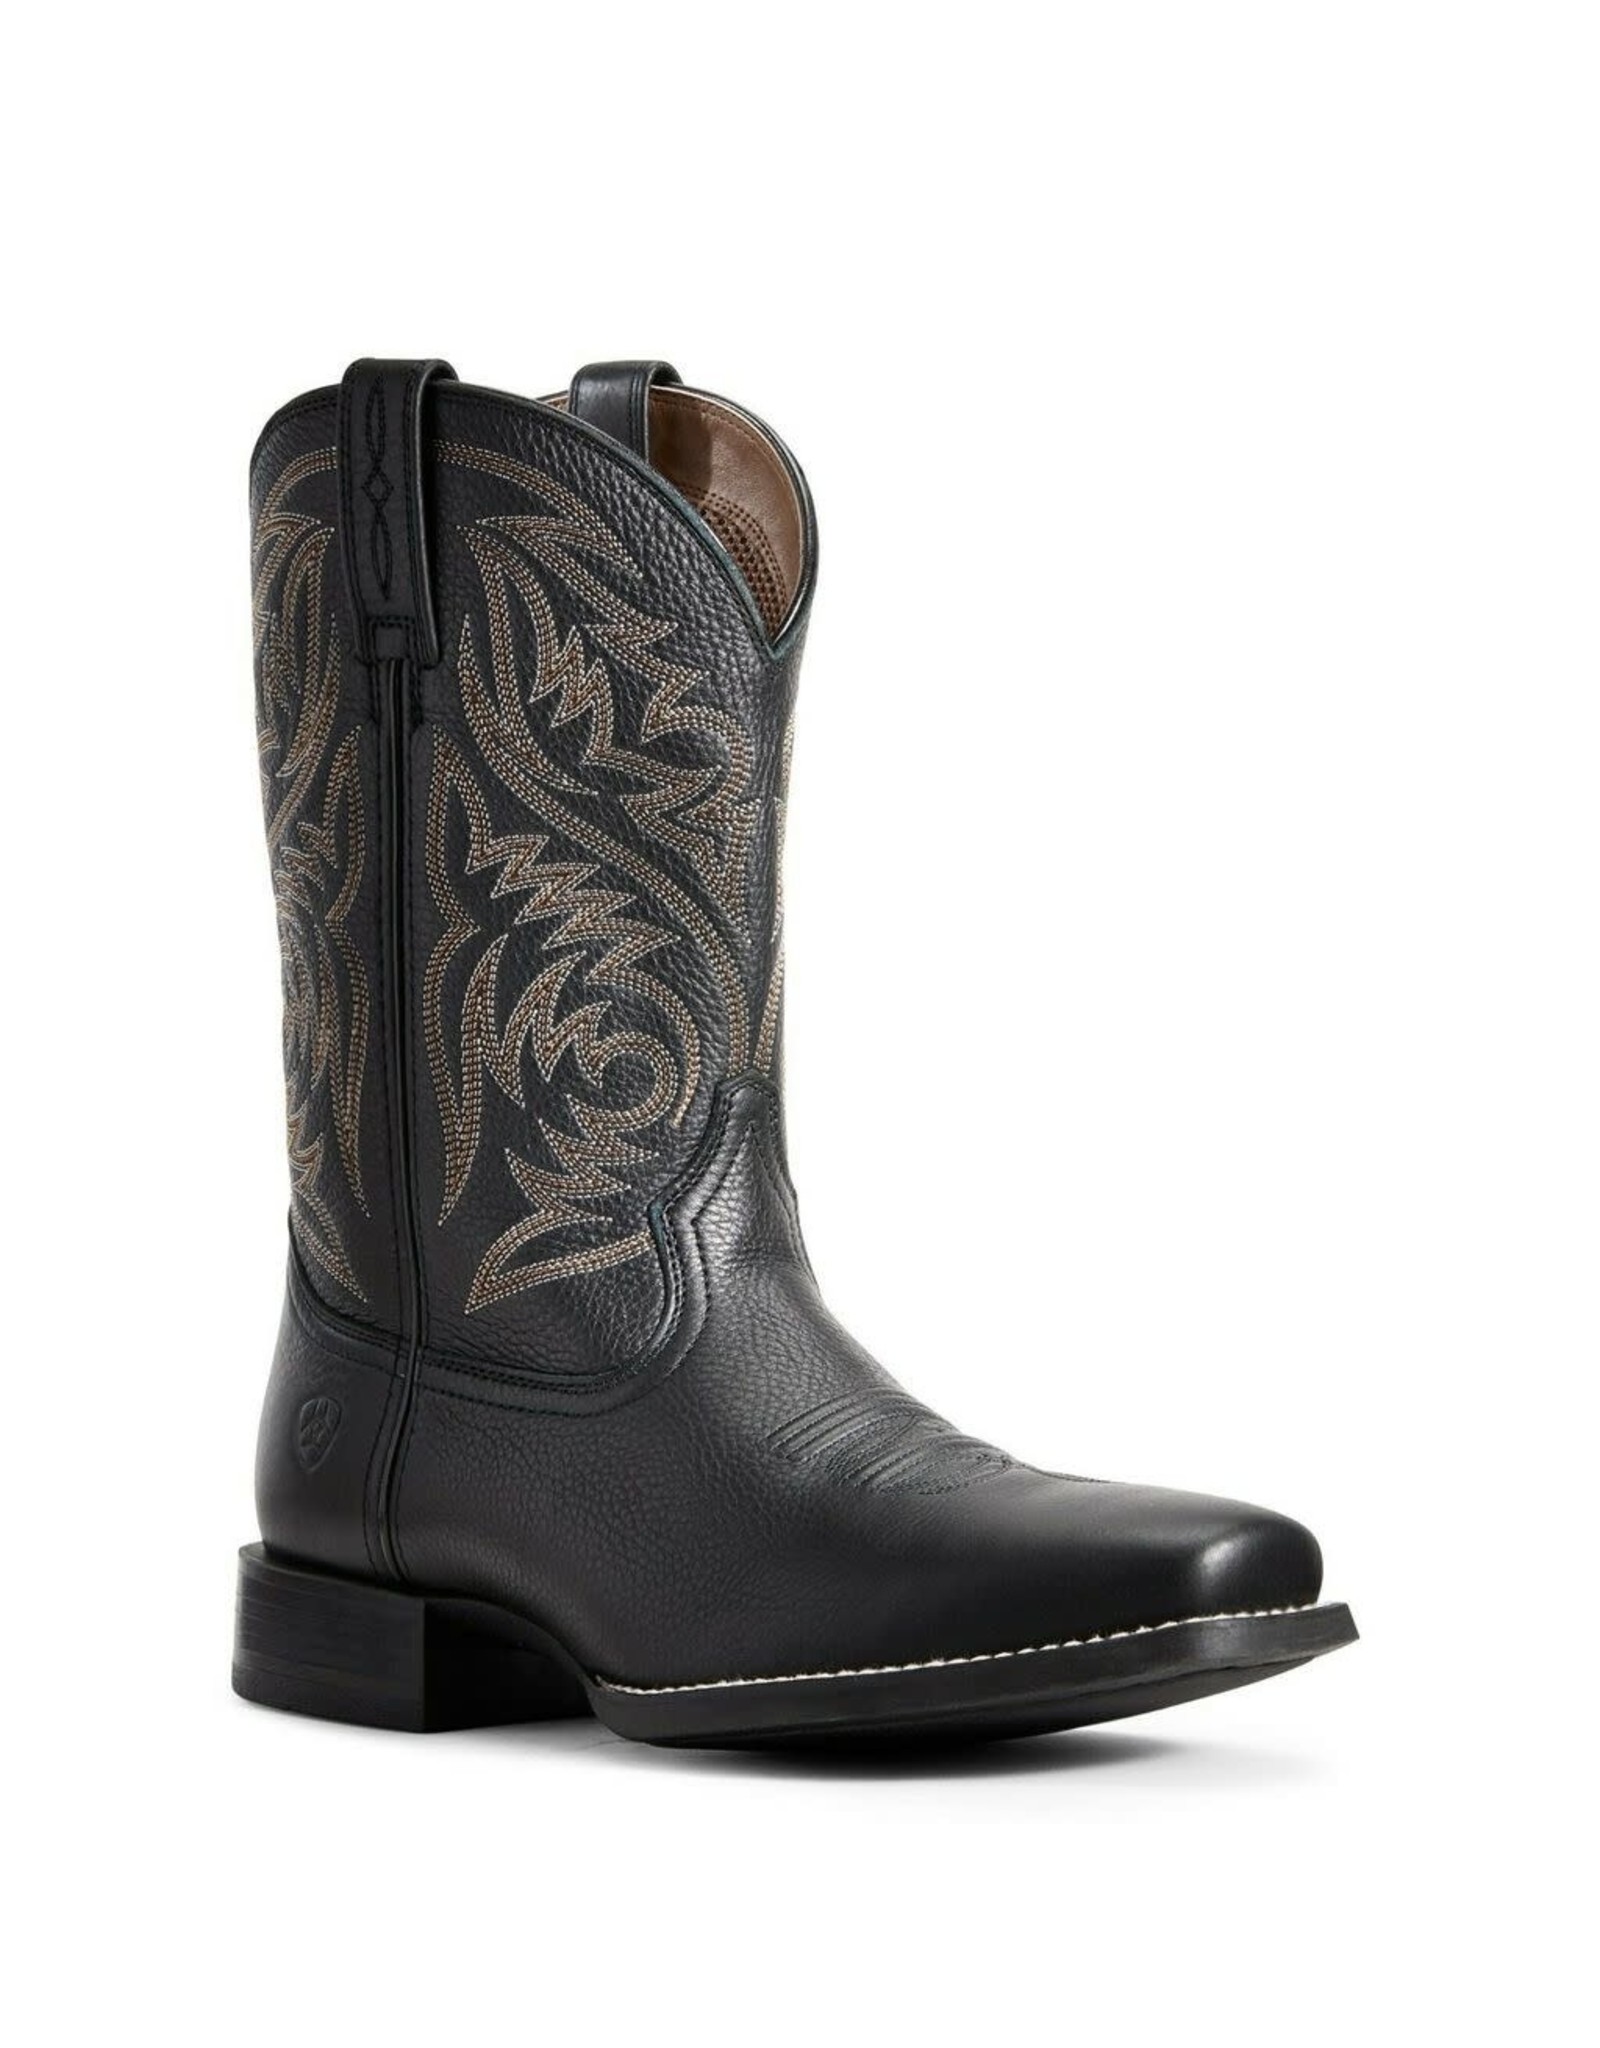 Ariat Men’s Sports Herdsman 10029743 Black Western Boots